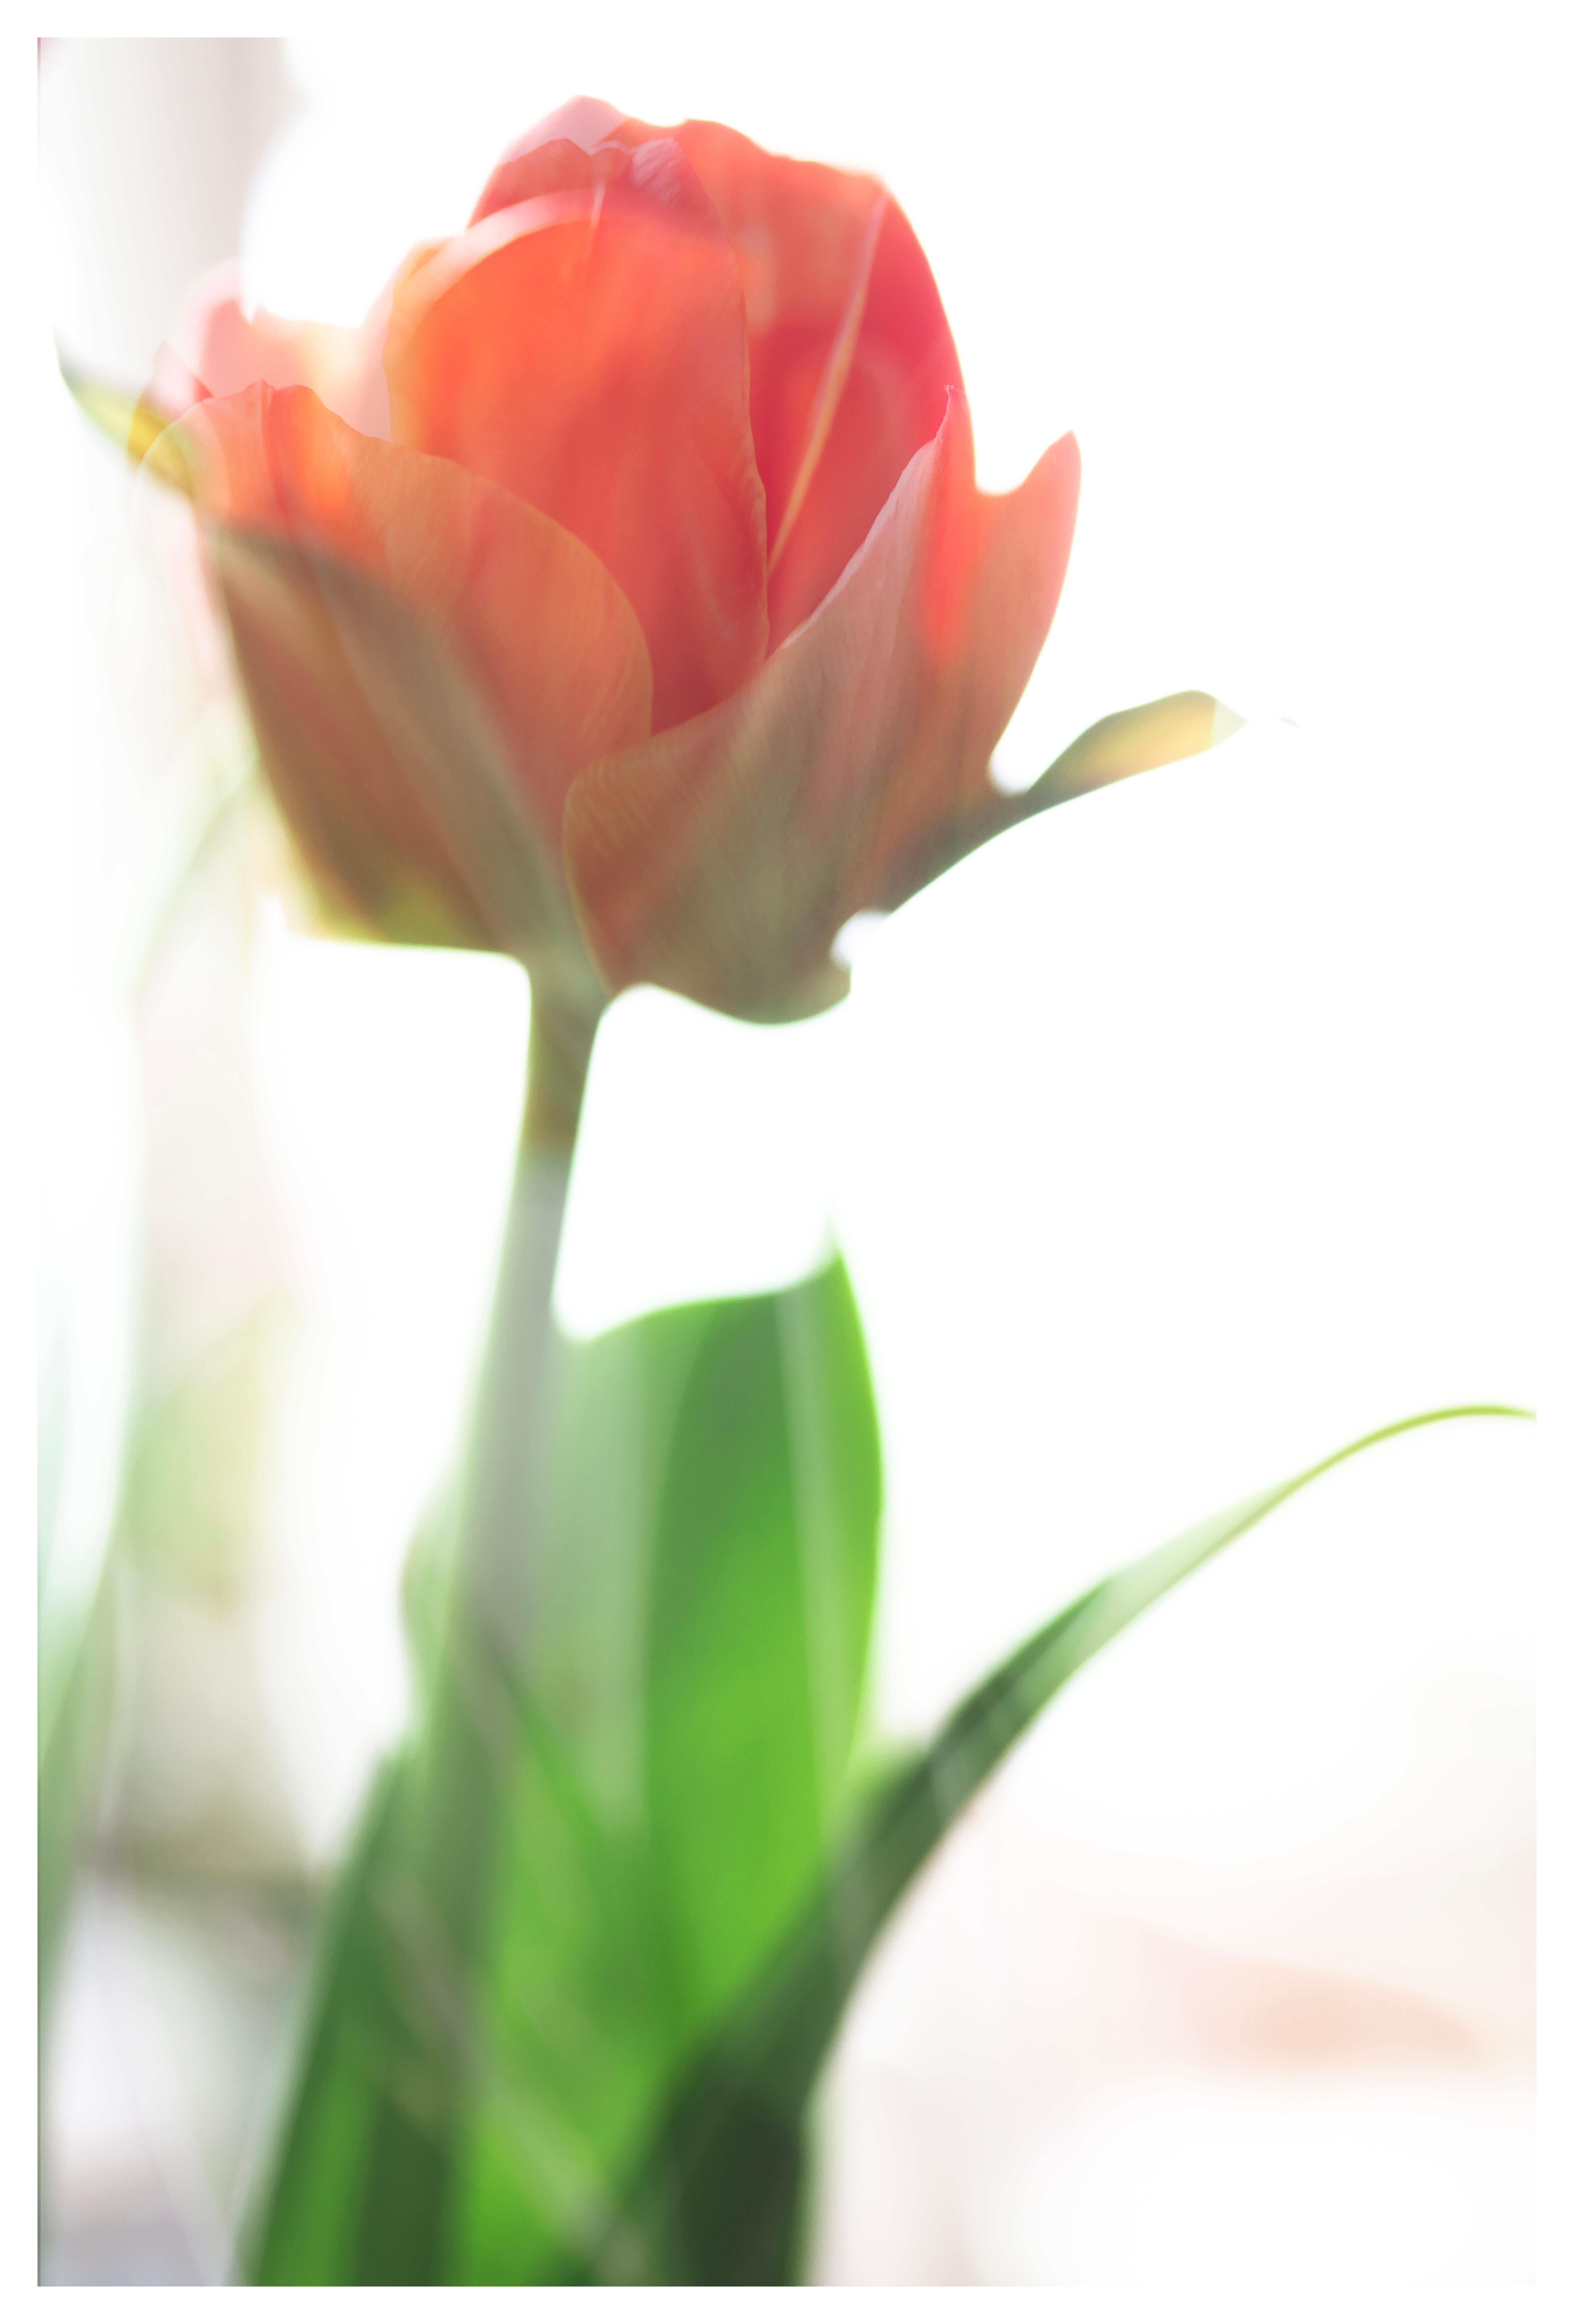 Sophia Milligan Color Photograph – Großformatige Fotografie „Tulip Awakening“ kühne Blume Pastellrot Orange Weiß